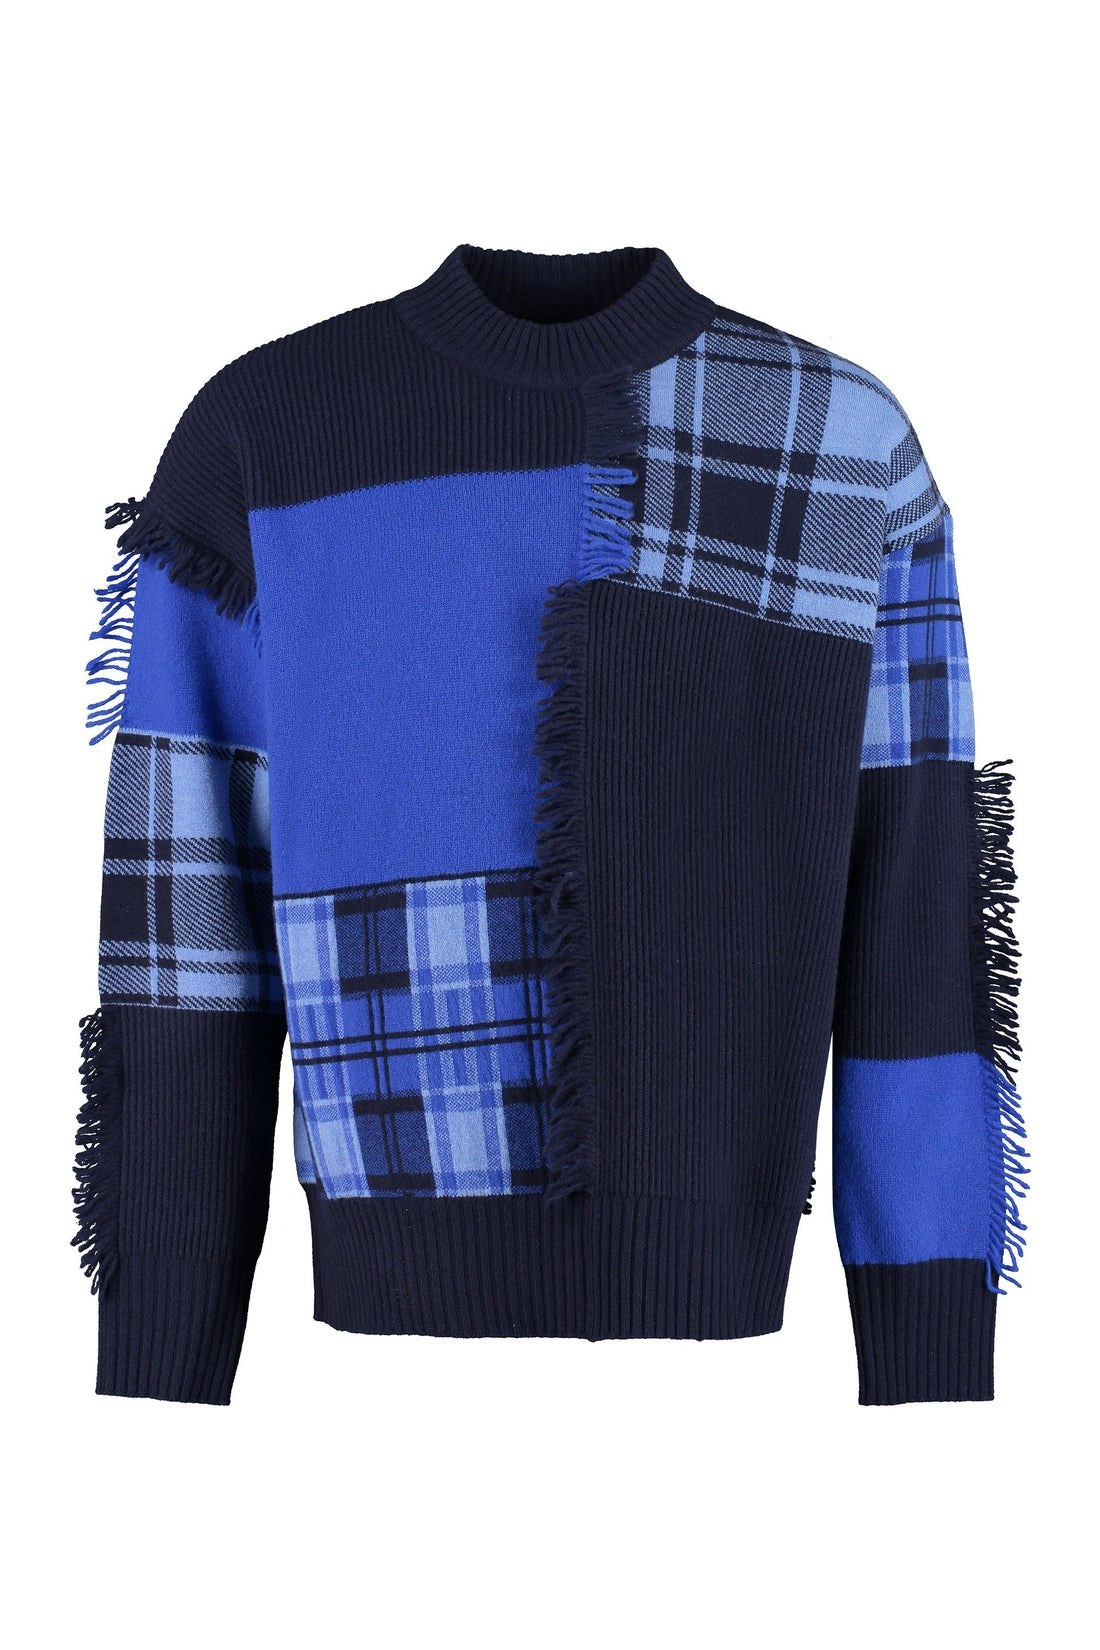 Versace-OUTLET-SALE-Long sleeve crew-neck sweater-ARCHIVIST